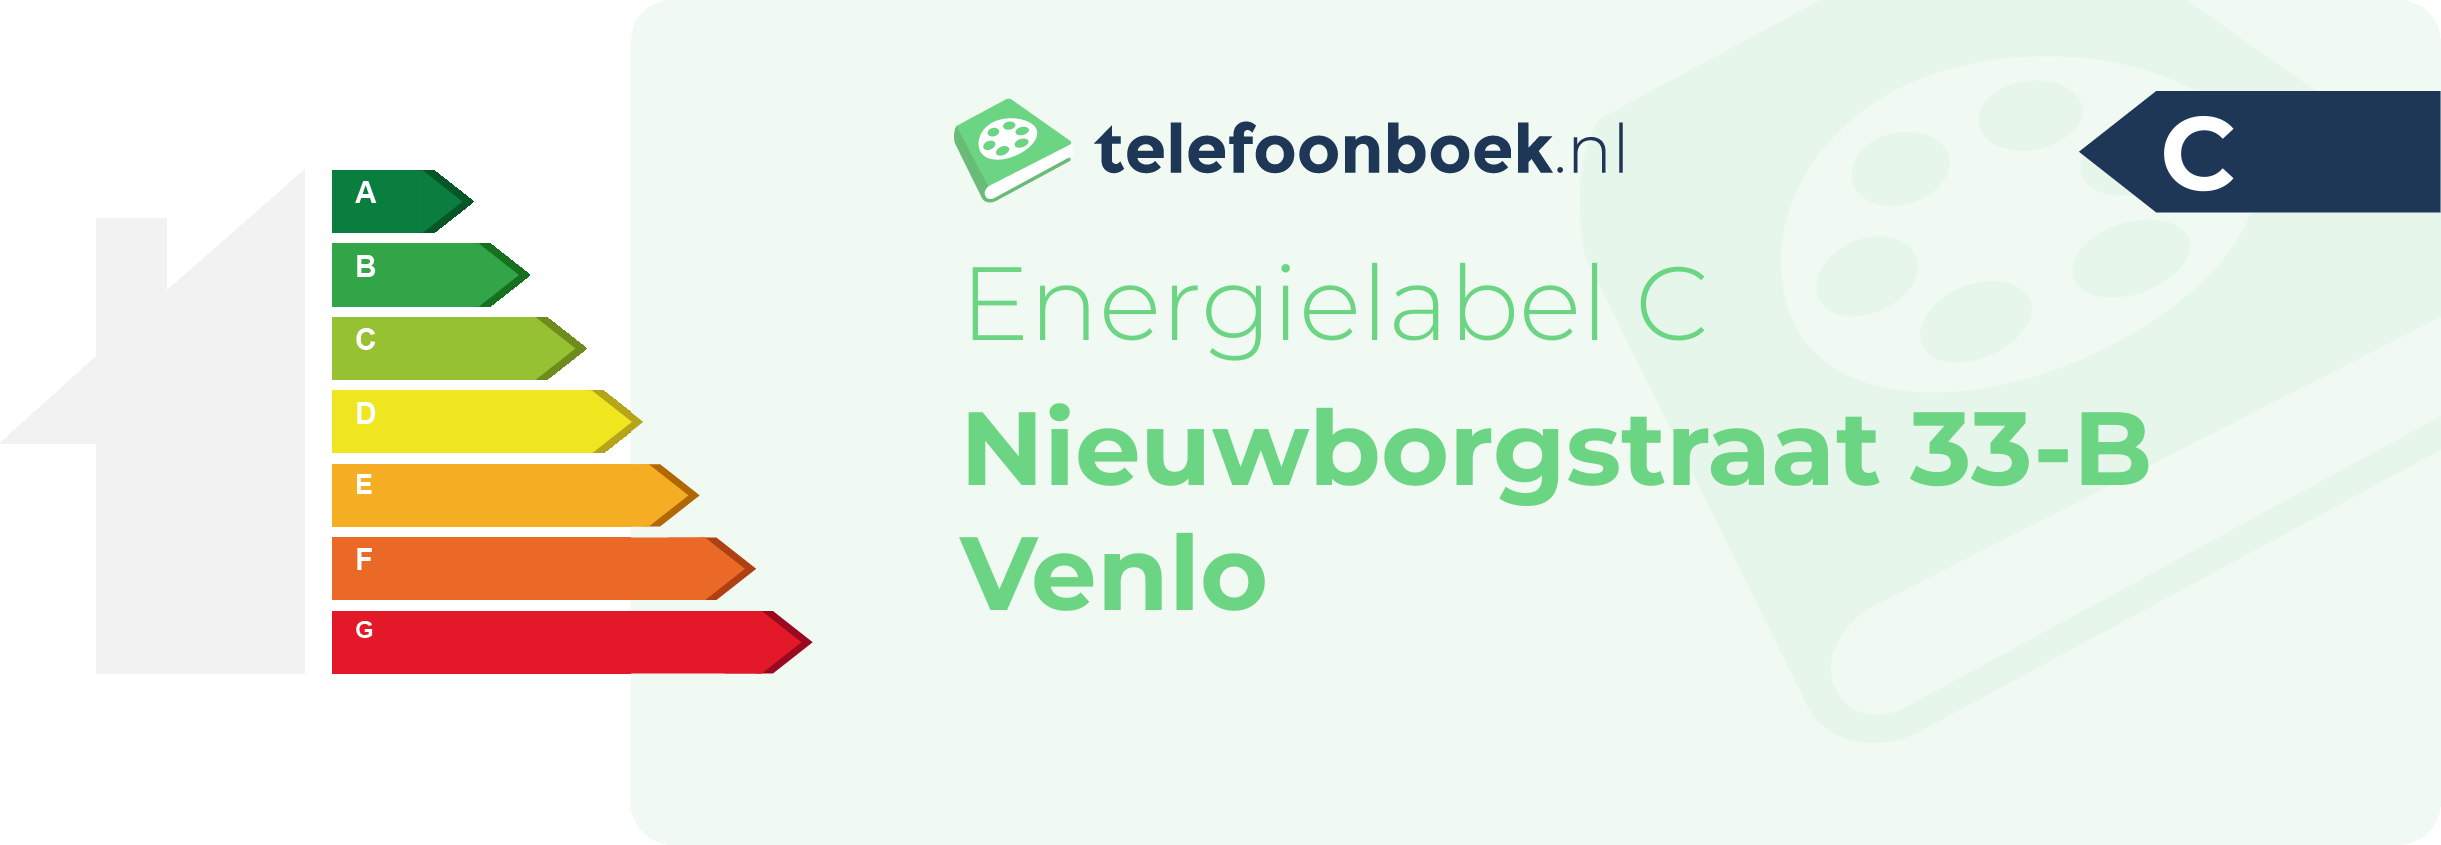 Energielabel Nieuwborgstraat 33-B Venlo